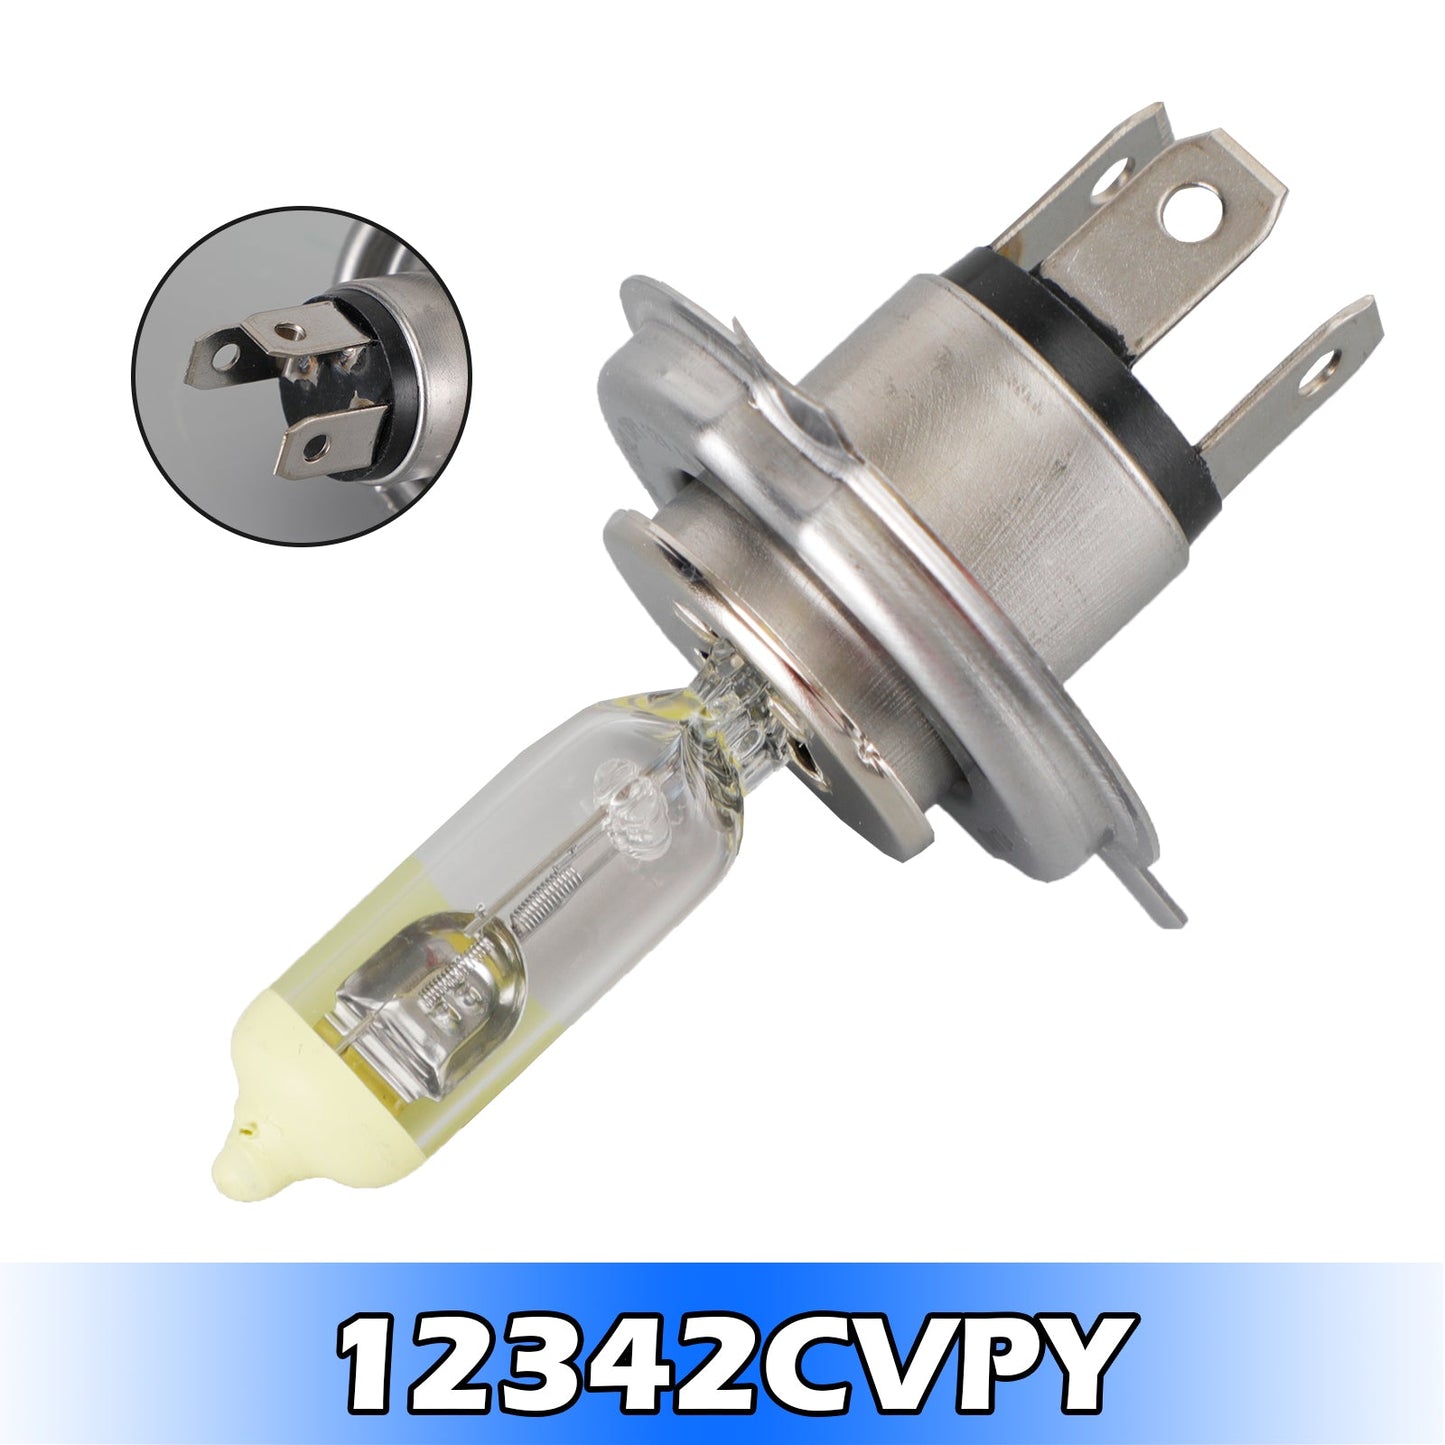 For Philips 12342CVPY Car Standard Halogen Headlight H4 12V60/55W P43t